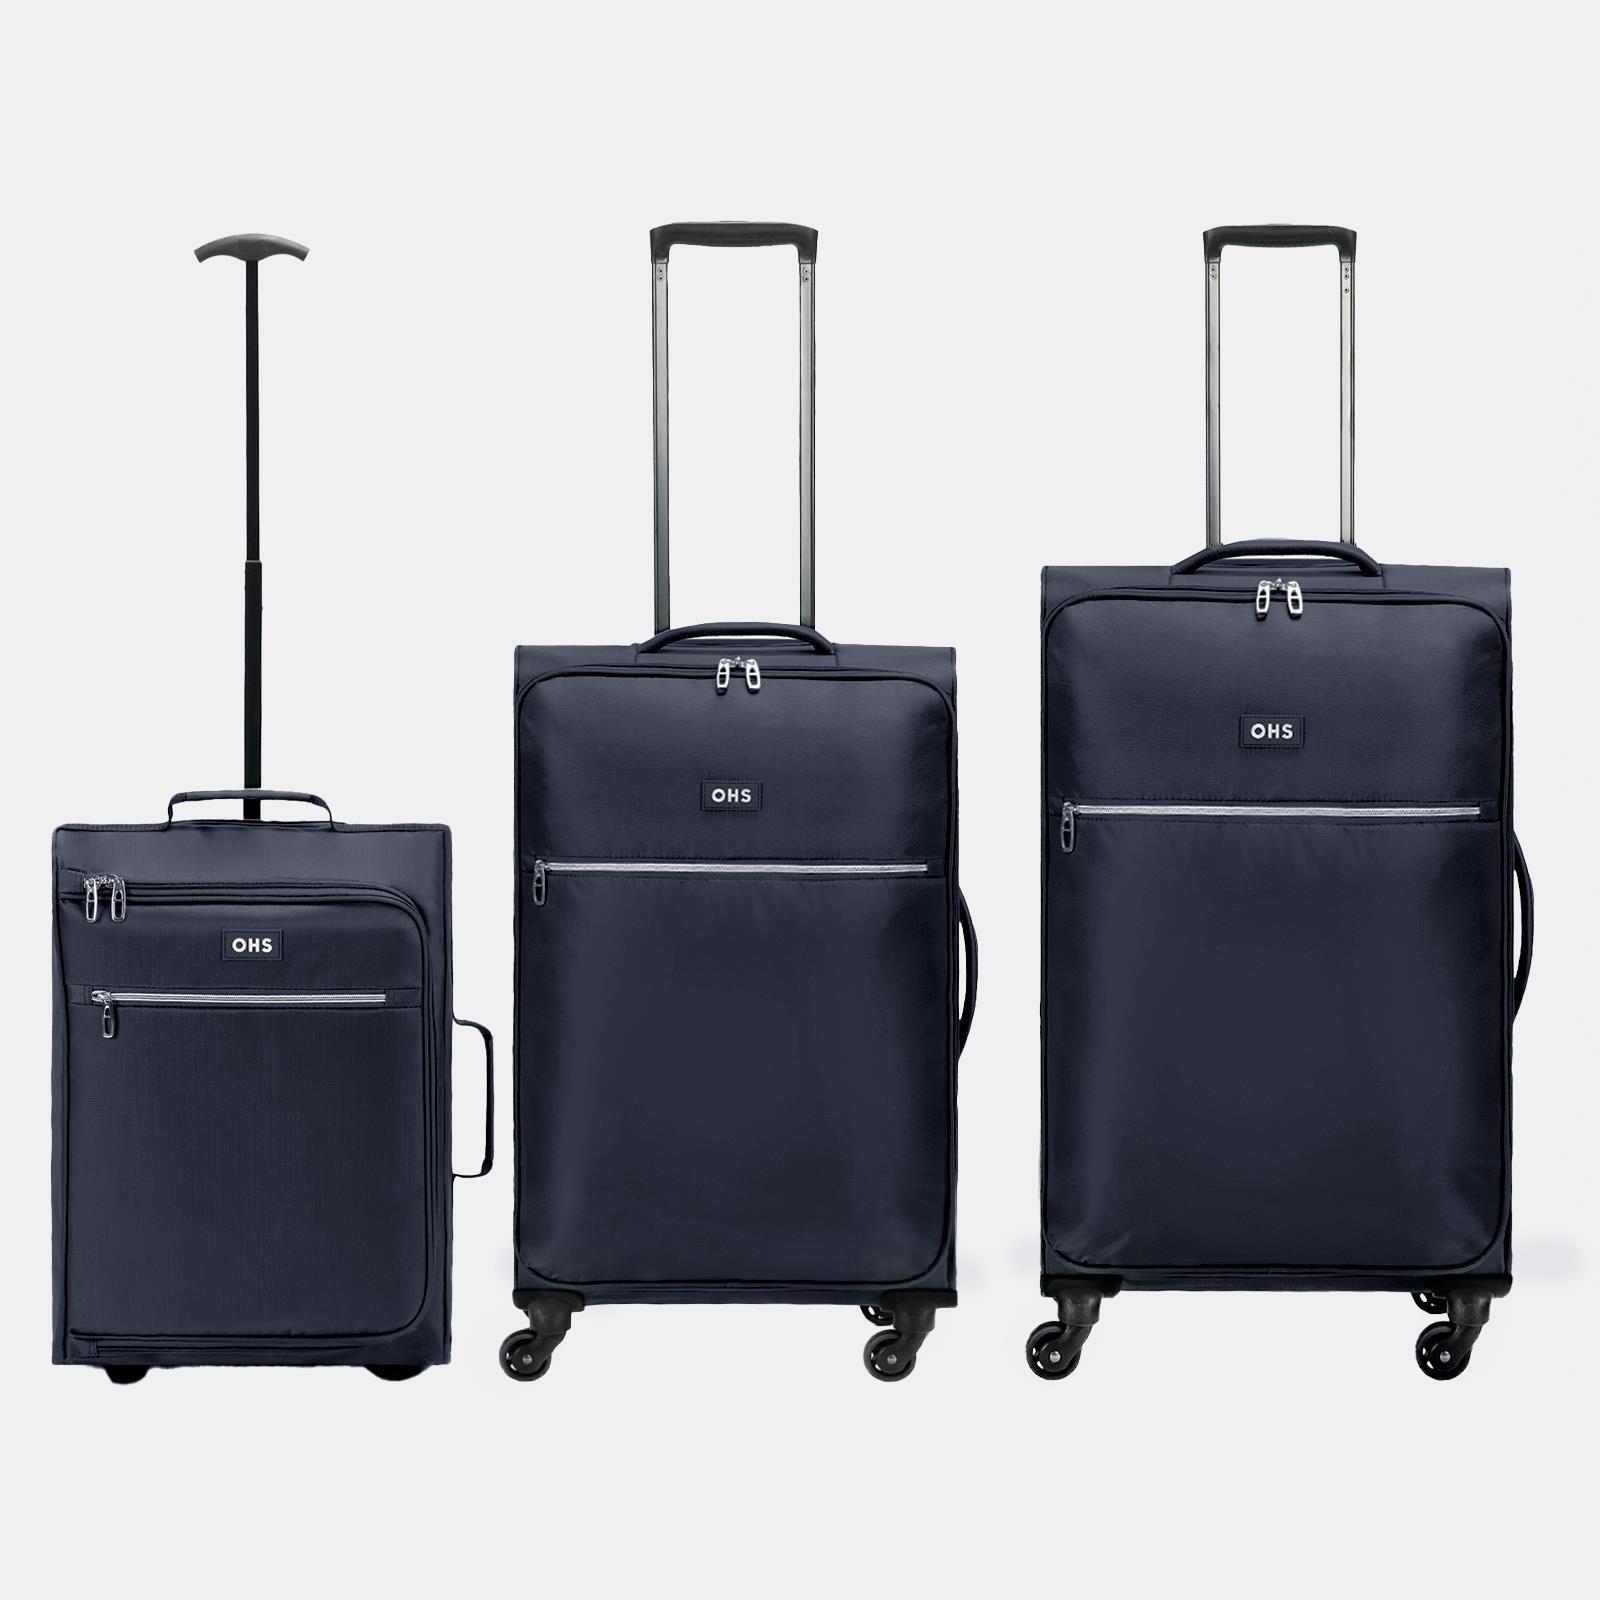 3 Piece Set Of Suitcase Luggage Soft Shell Travel Case Bag